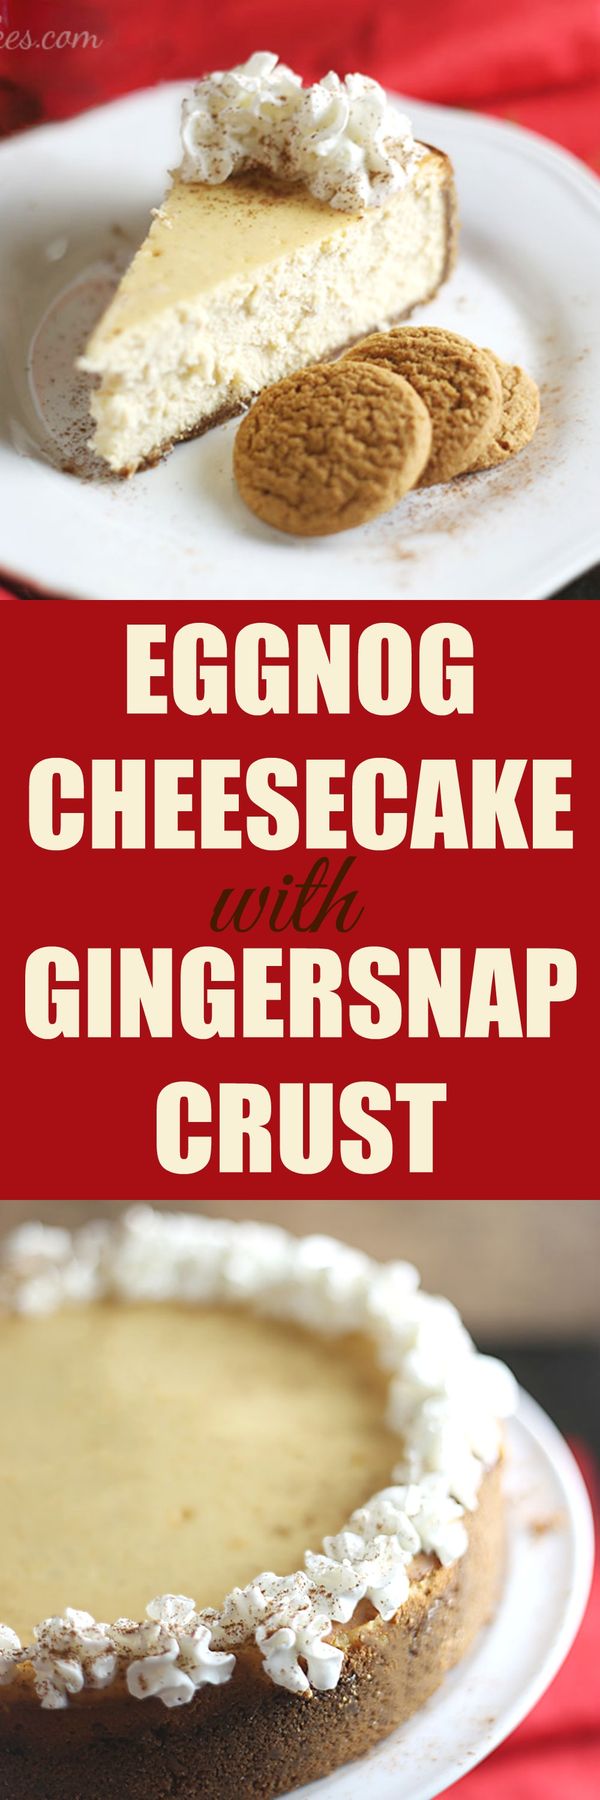 Eggnog Cheesecake with Gingersnap Crust